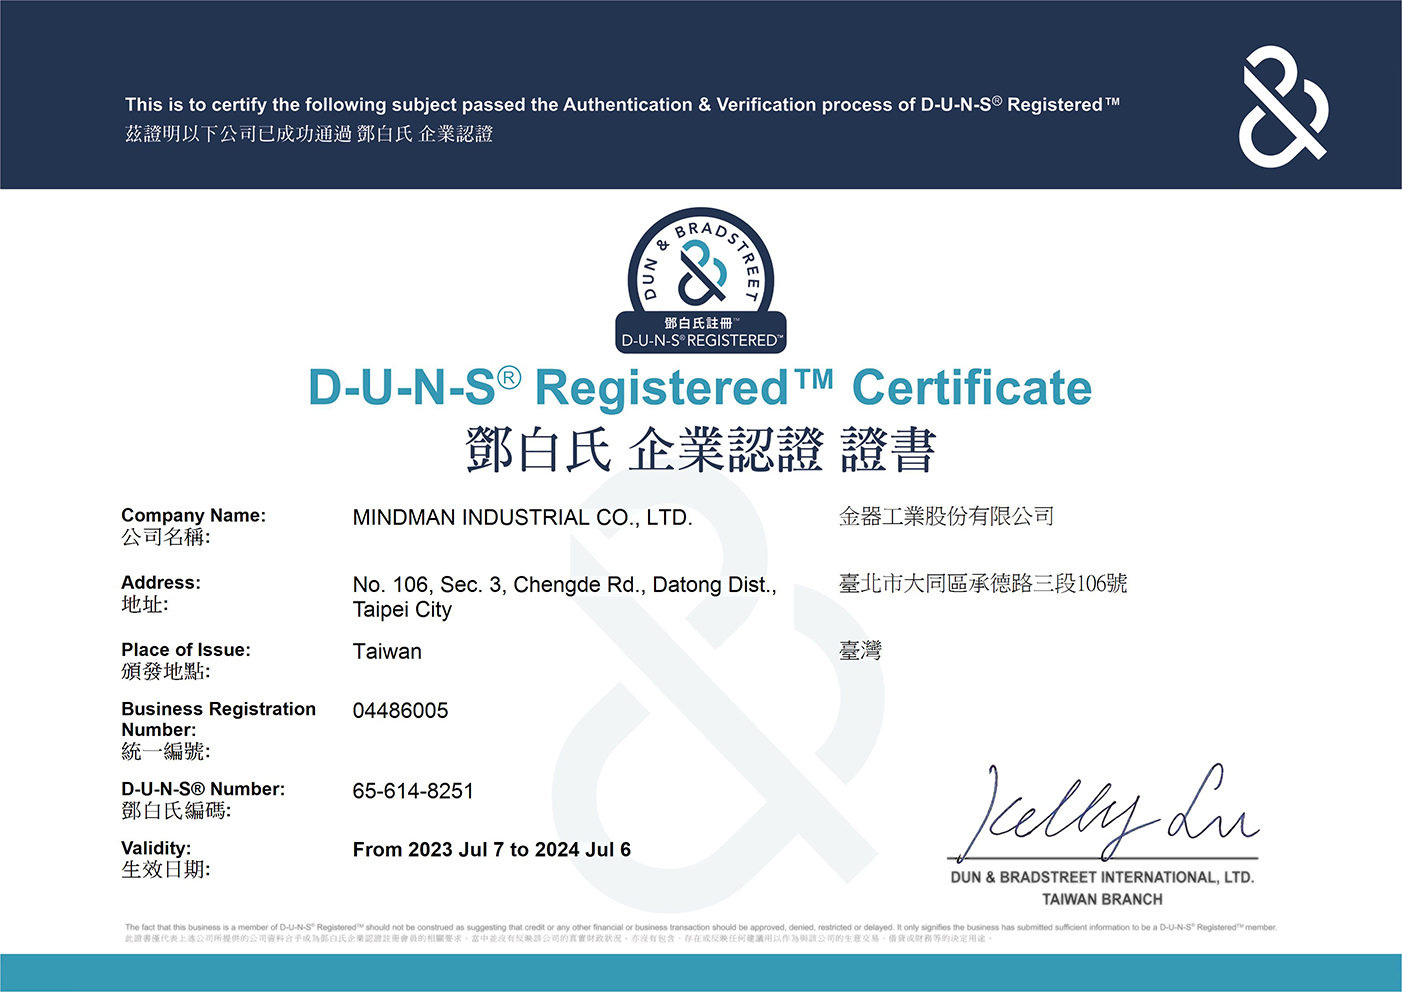 D-U-N-S Registered Certificate